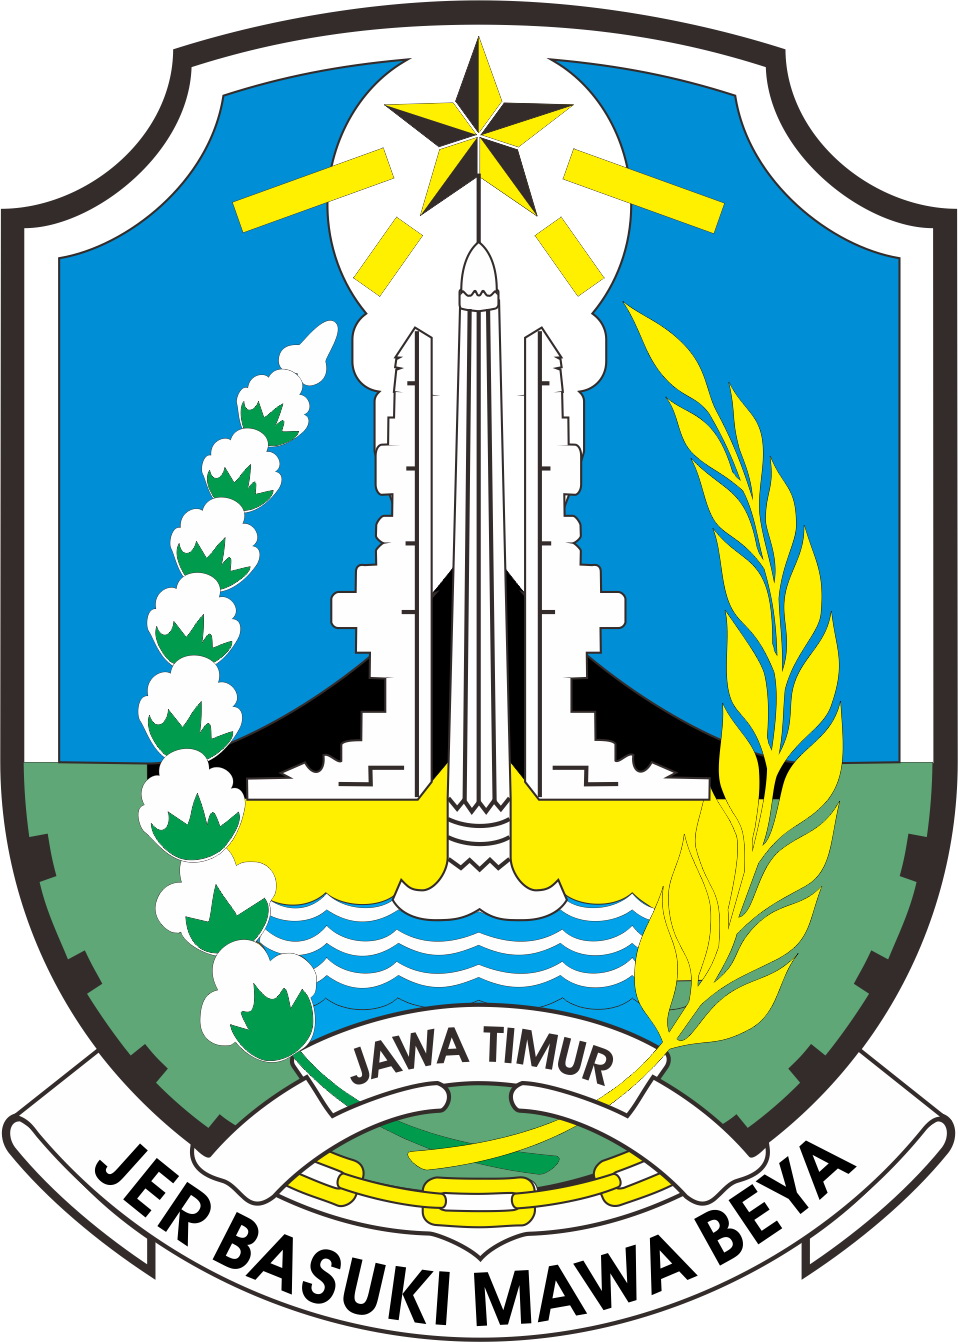 Lambang Jawa Timur dan Jer Basuki Mawa Beya  indomangga 